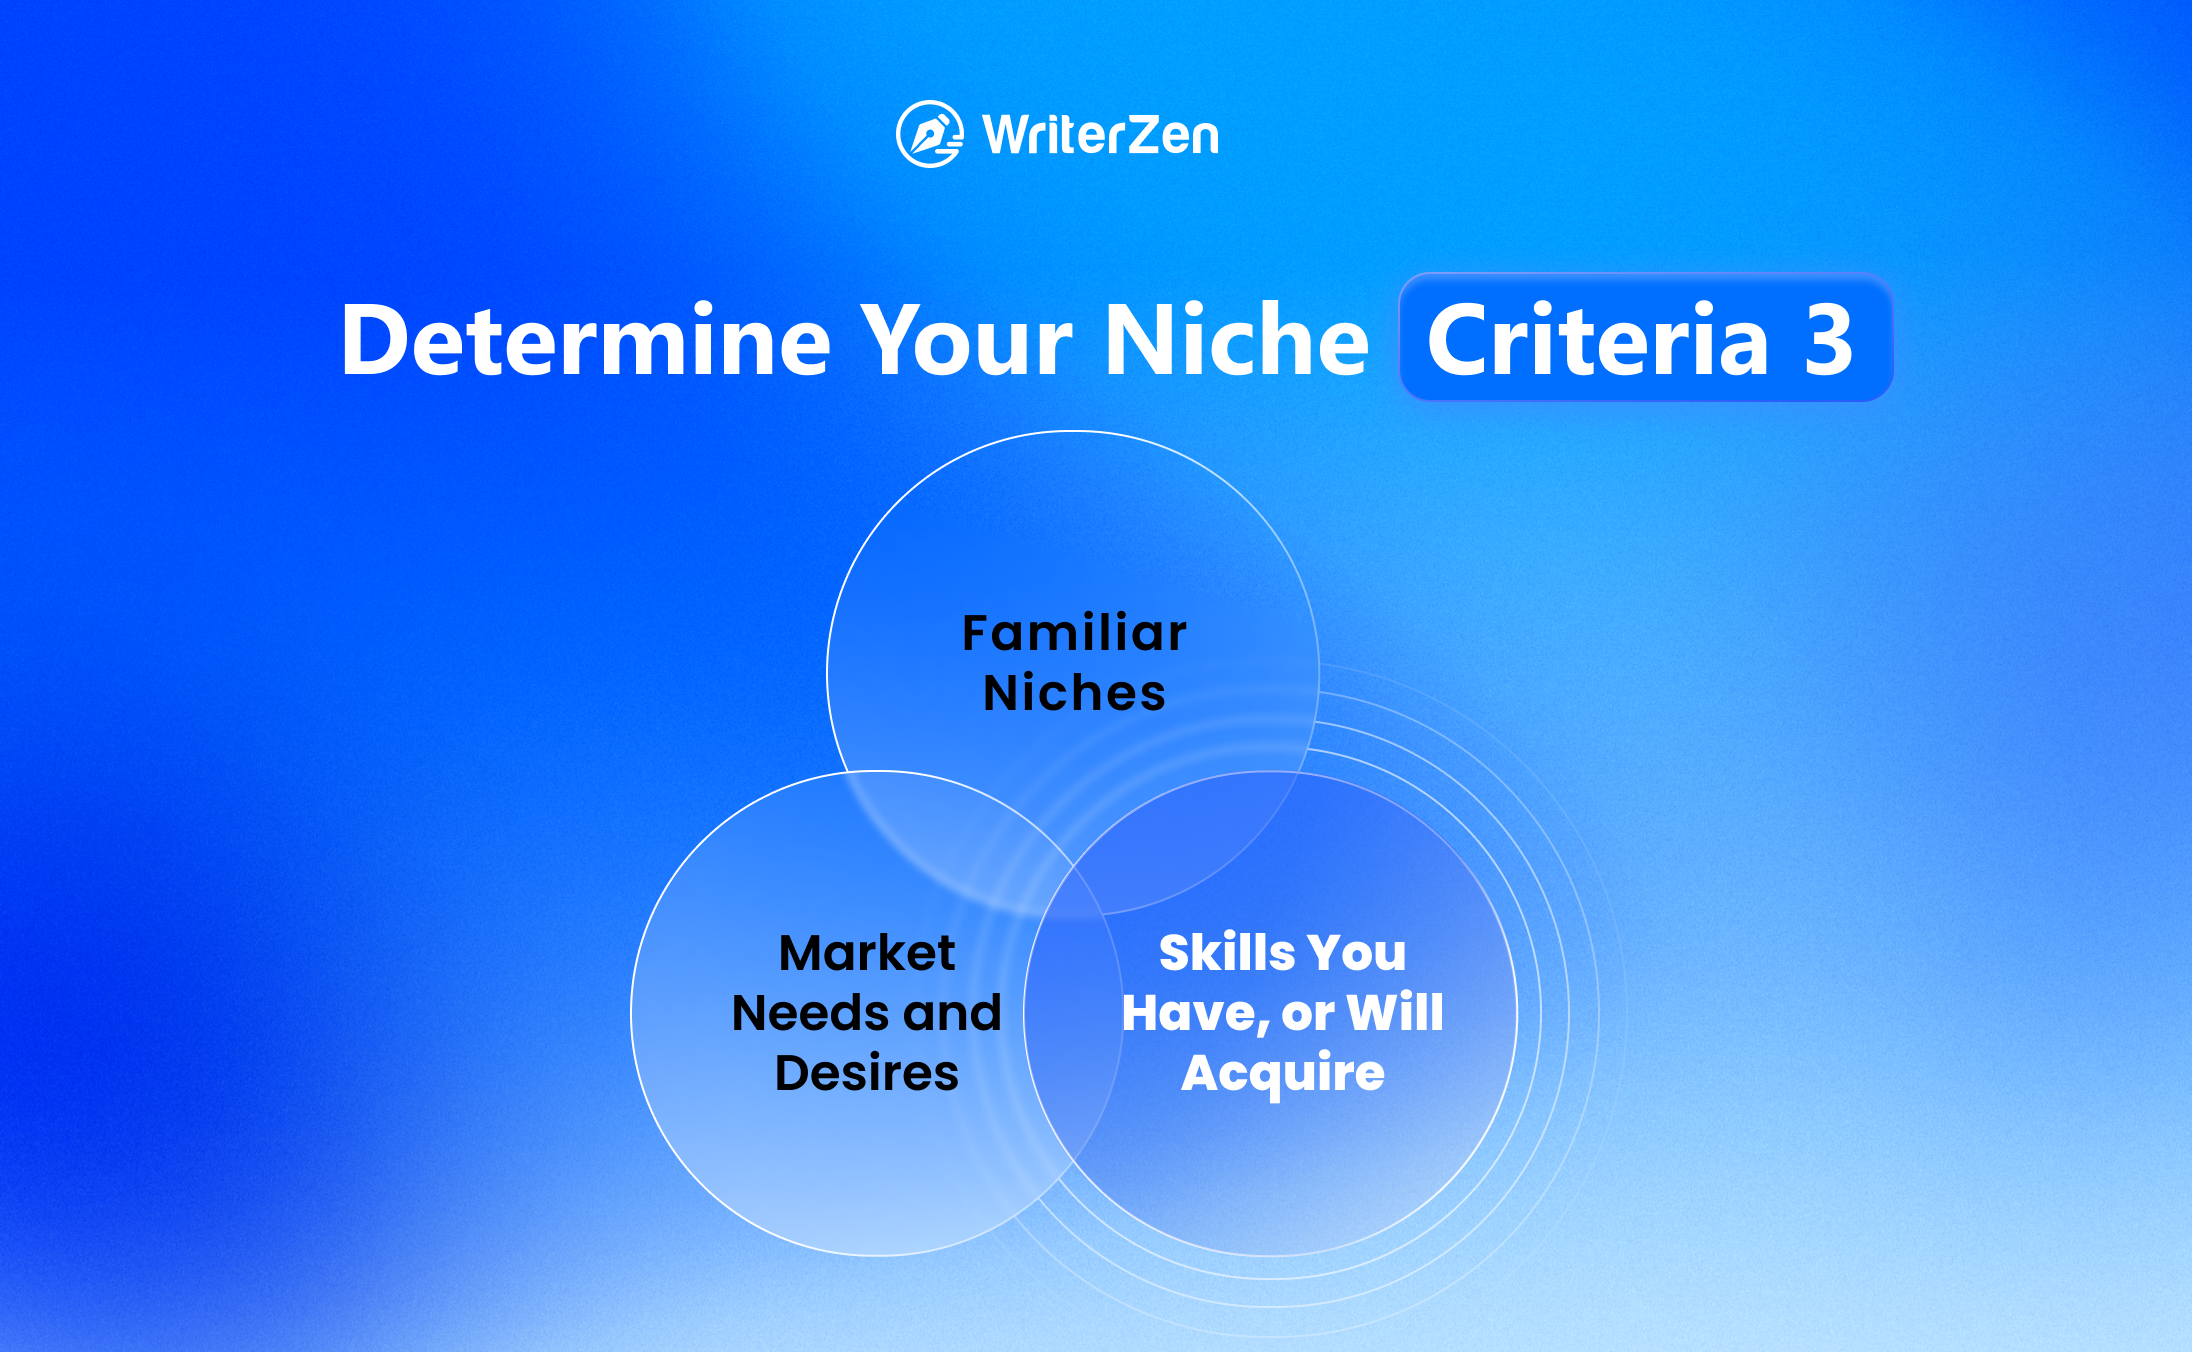 Determine Your Niche's Criteria Three: Skills You Have or Can Acquire